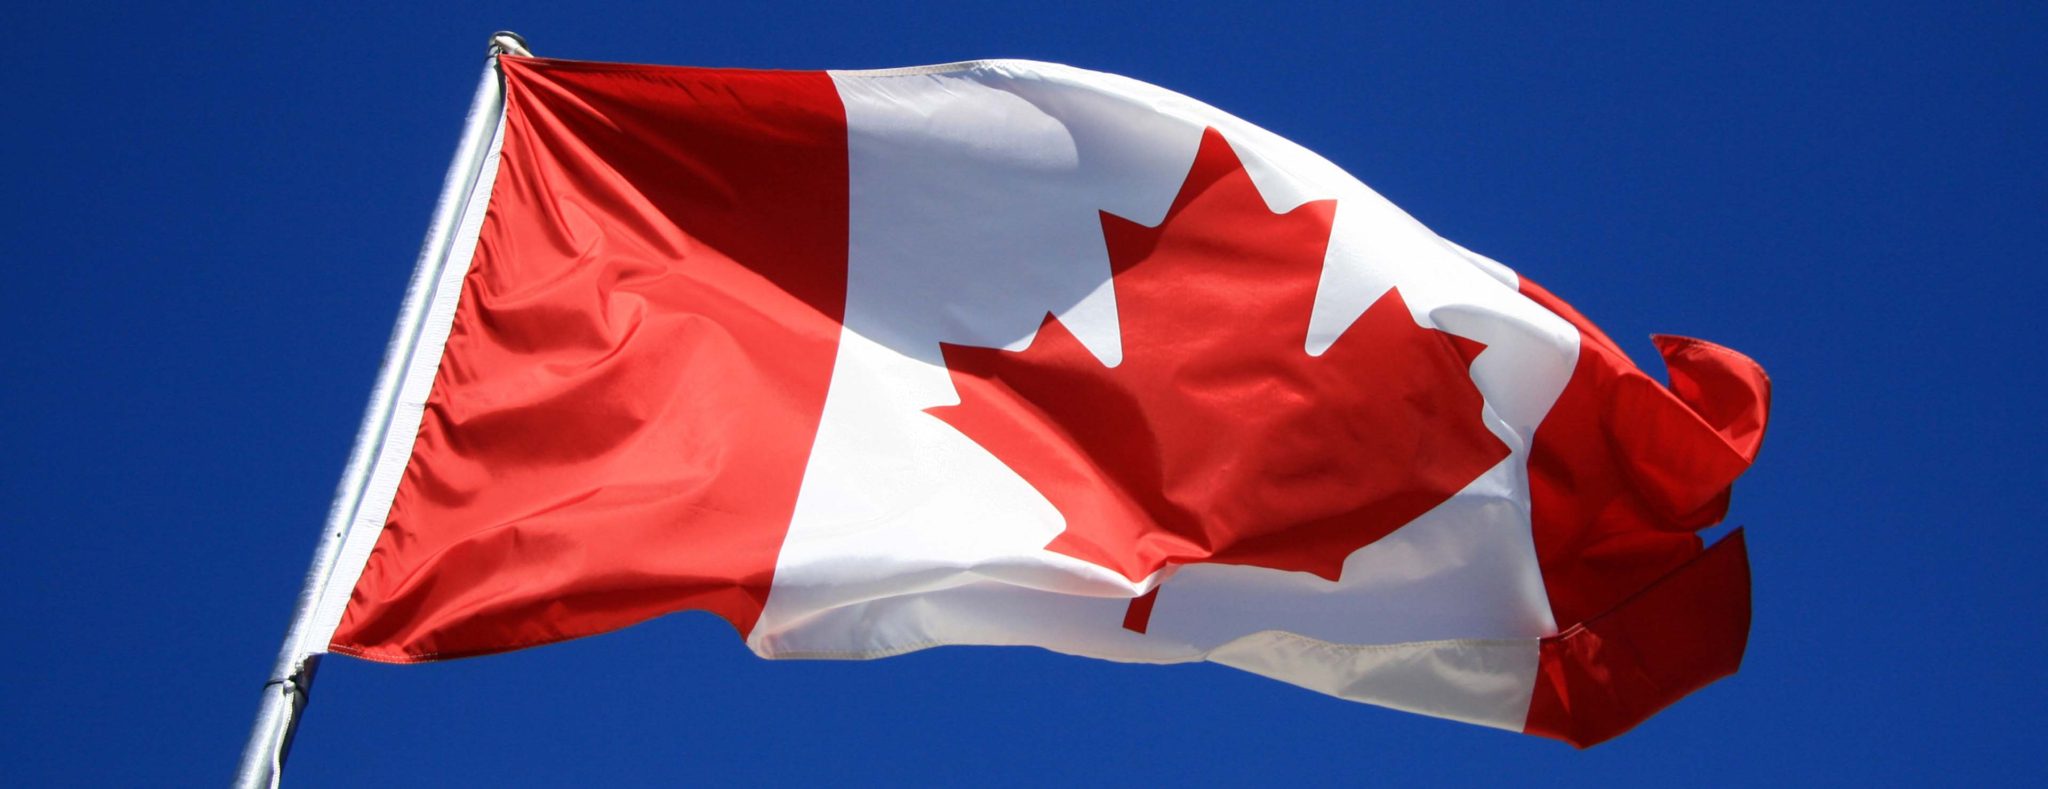 Canada Canadese vlag